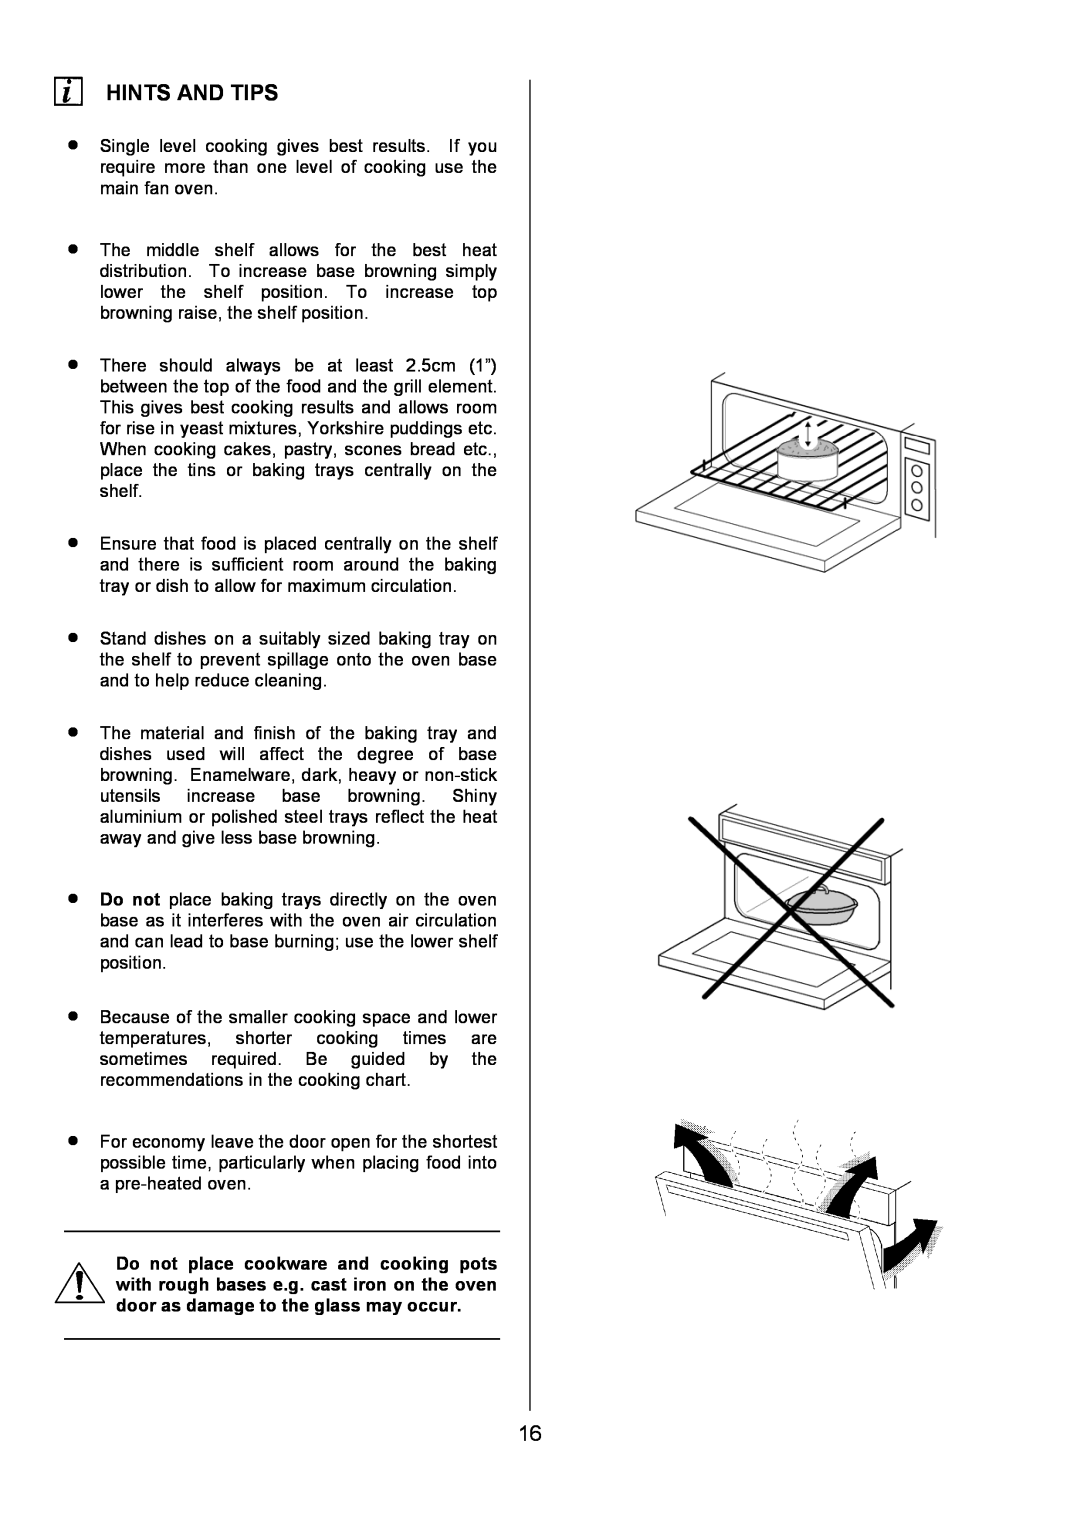 AEG U7101-4, 311704300 manual Hints And Tips 